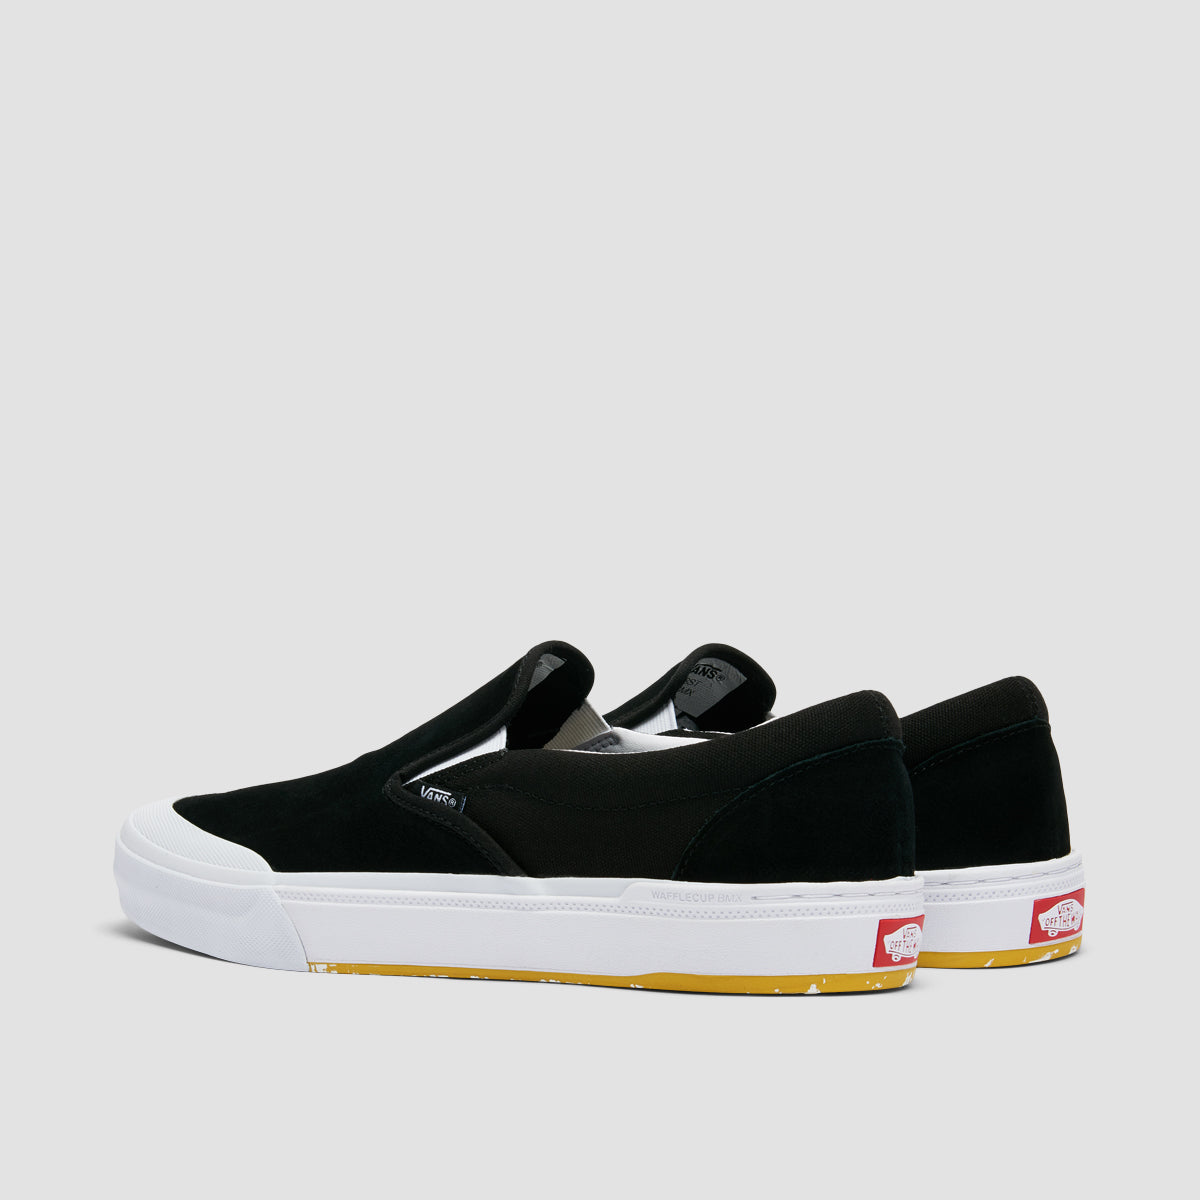 Vans BMX Slip-On Shoes - Marble Black/White/Yellow